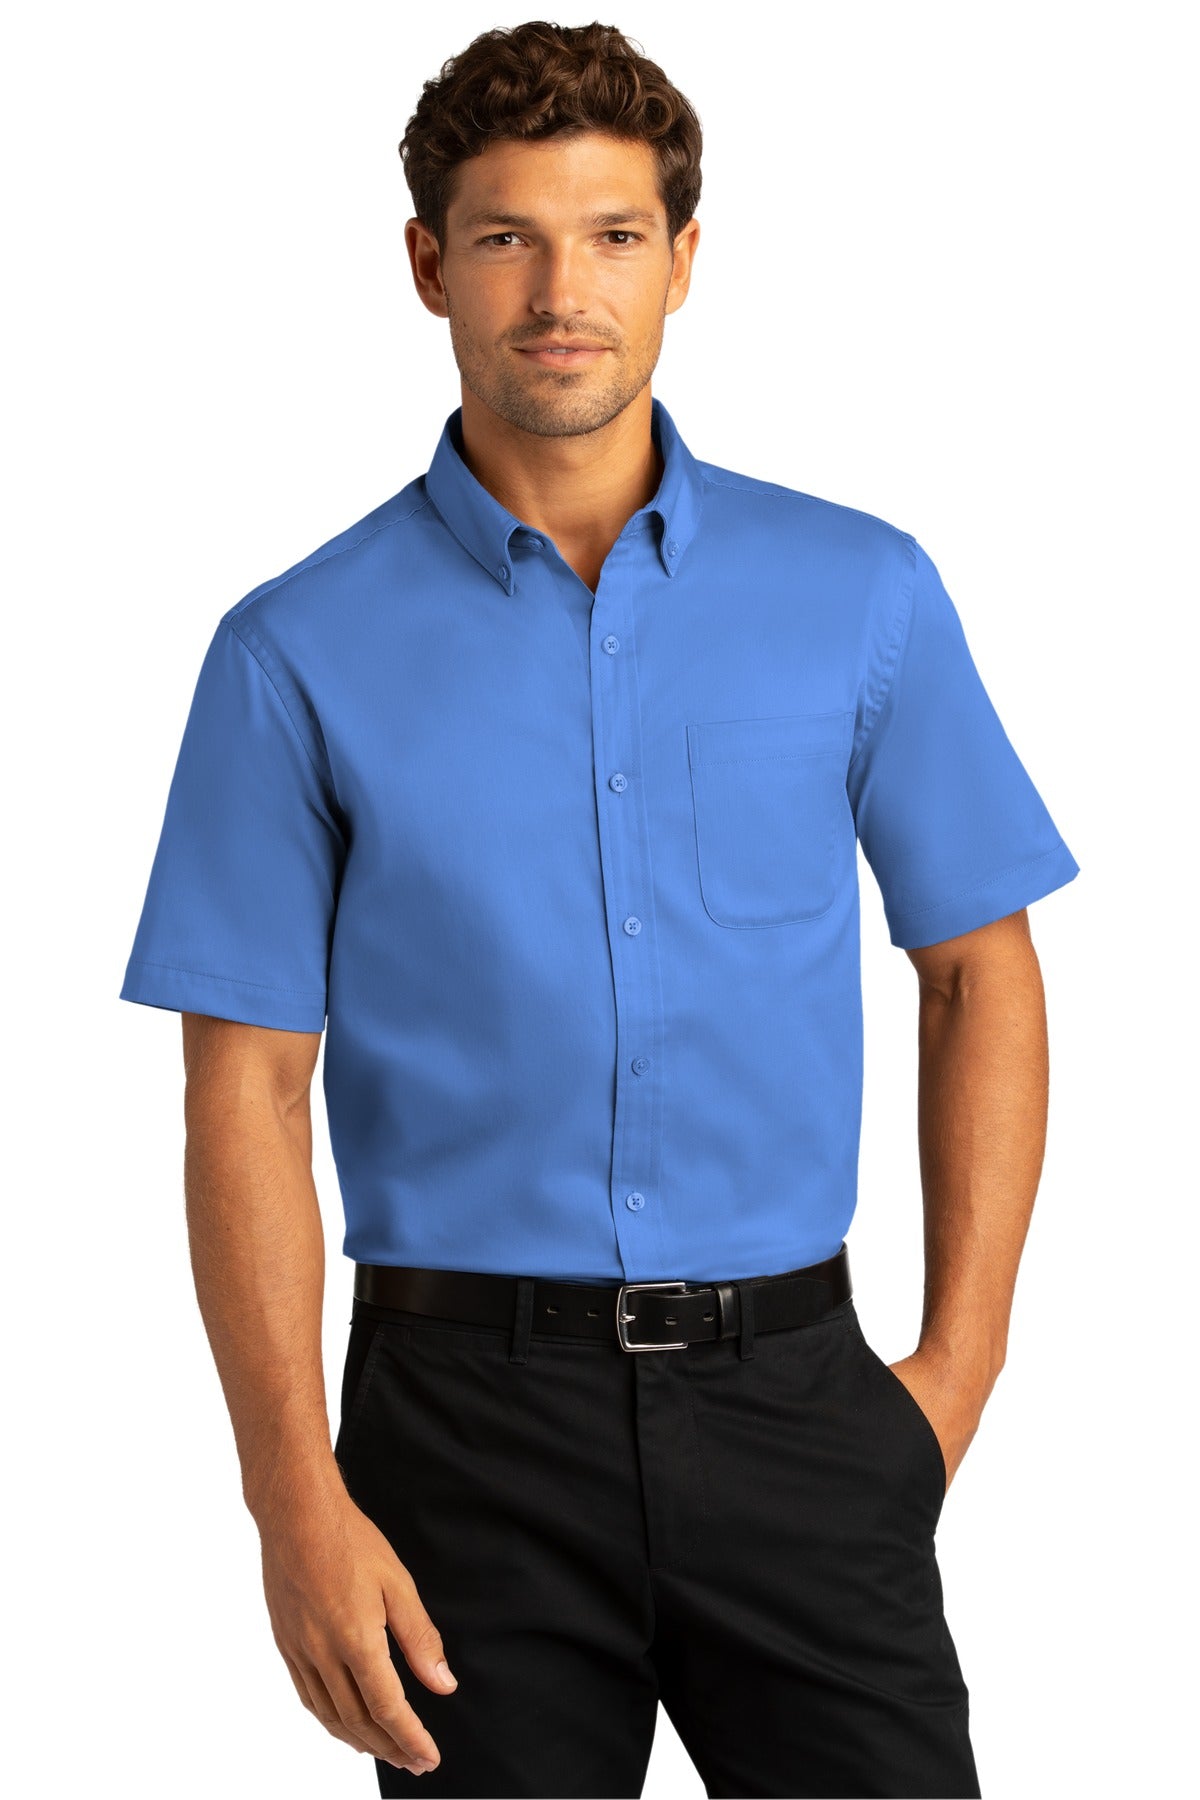 Port Authority® Short Sleeve SuperPro React™ Twill Shirt. W809 [Ultramarine Blue] - DFW Impression